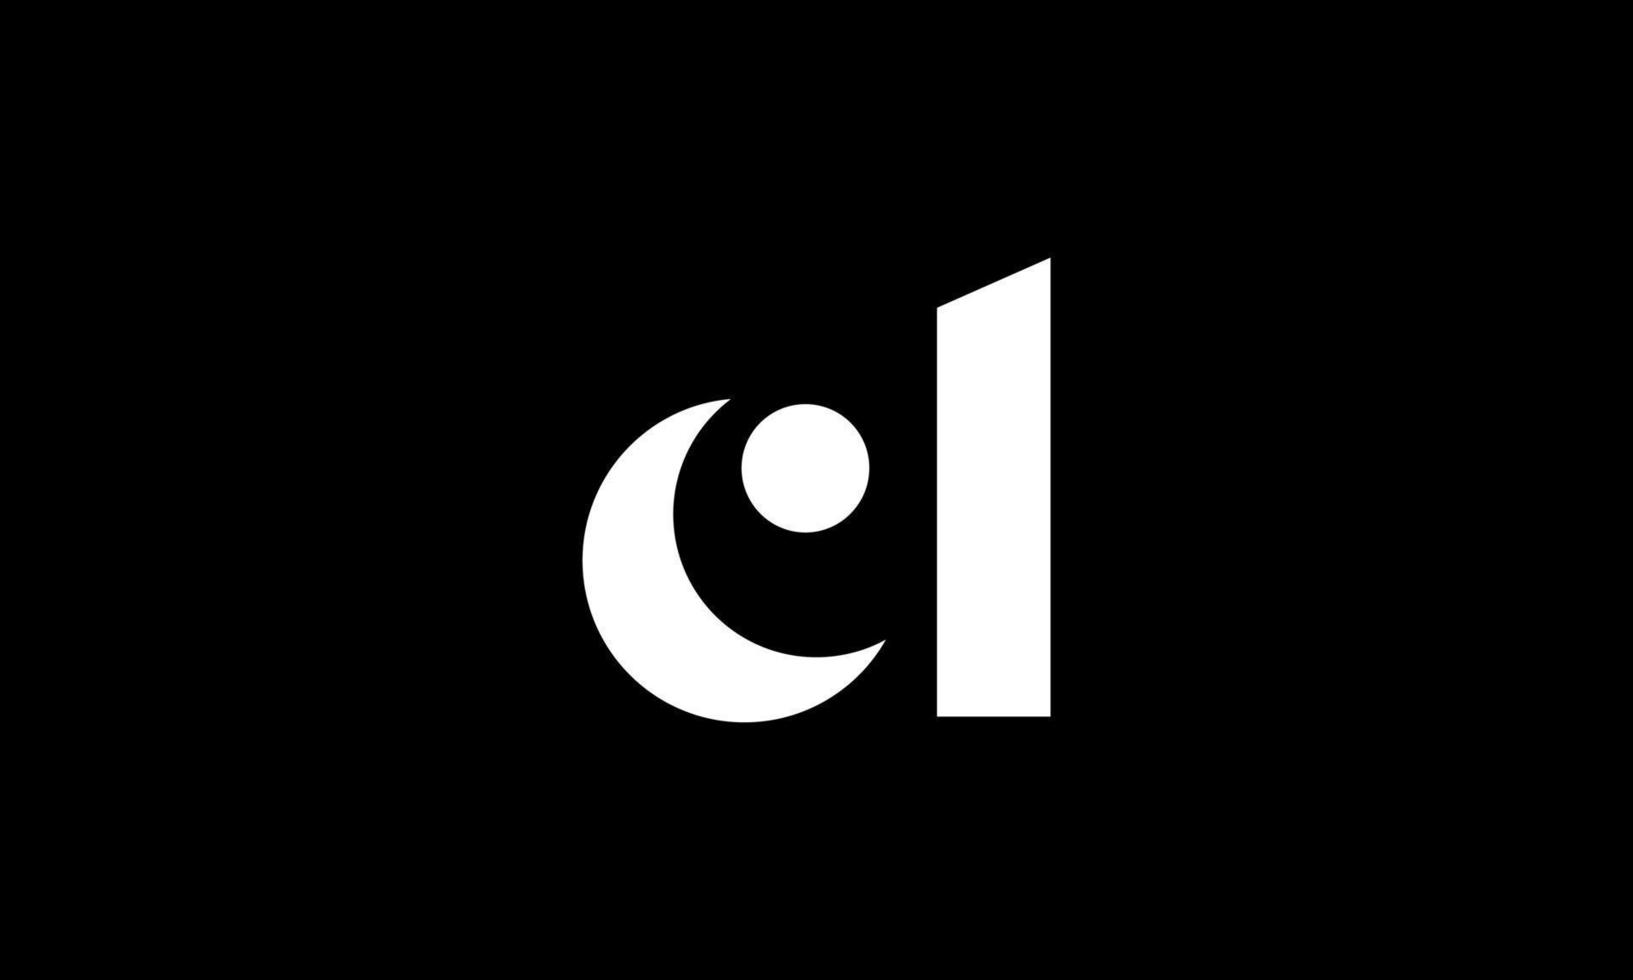 diseño de logotipo de letra inicial cl en fondo negro. vector profesional.